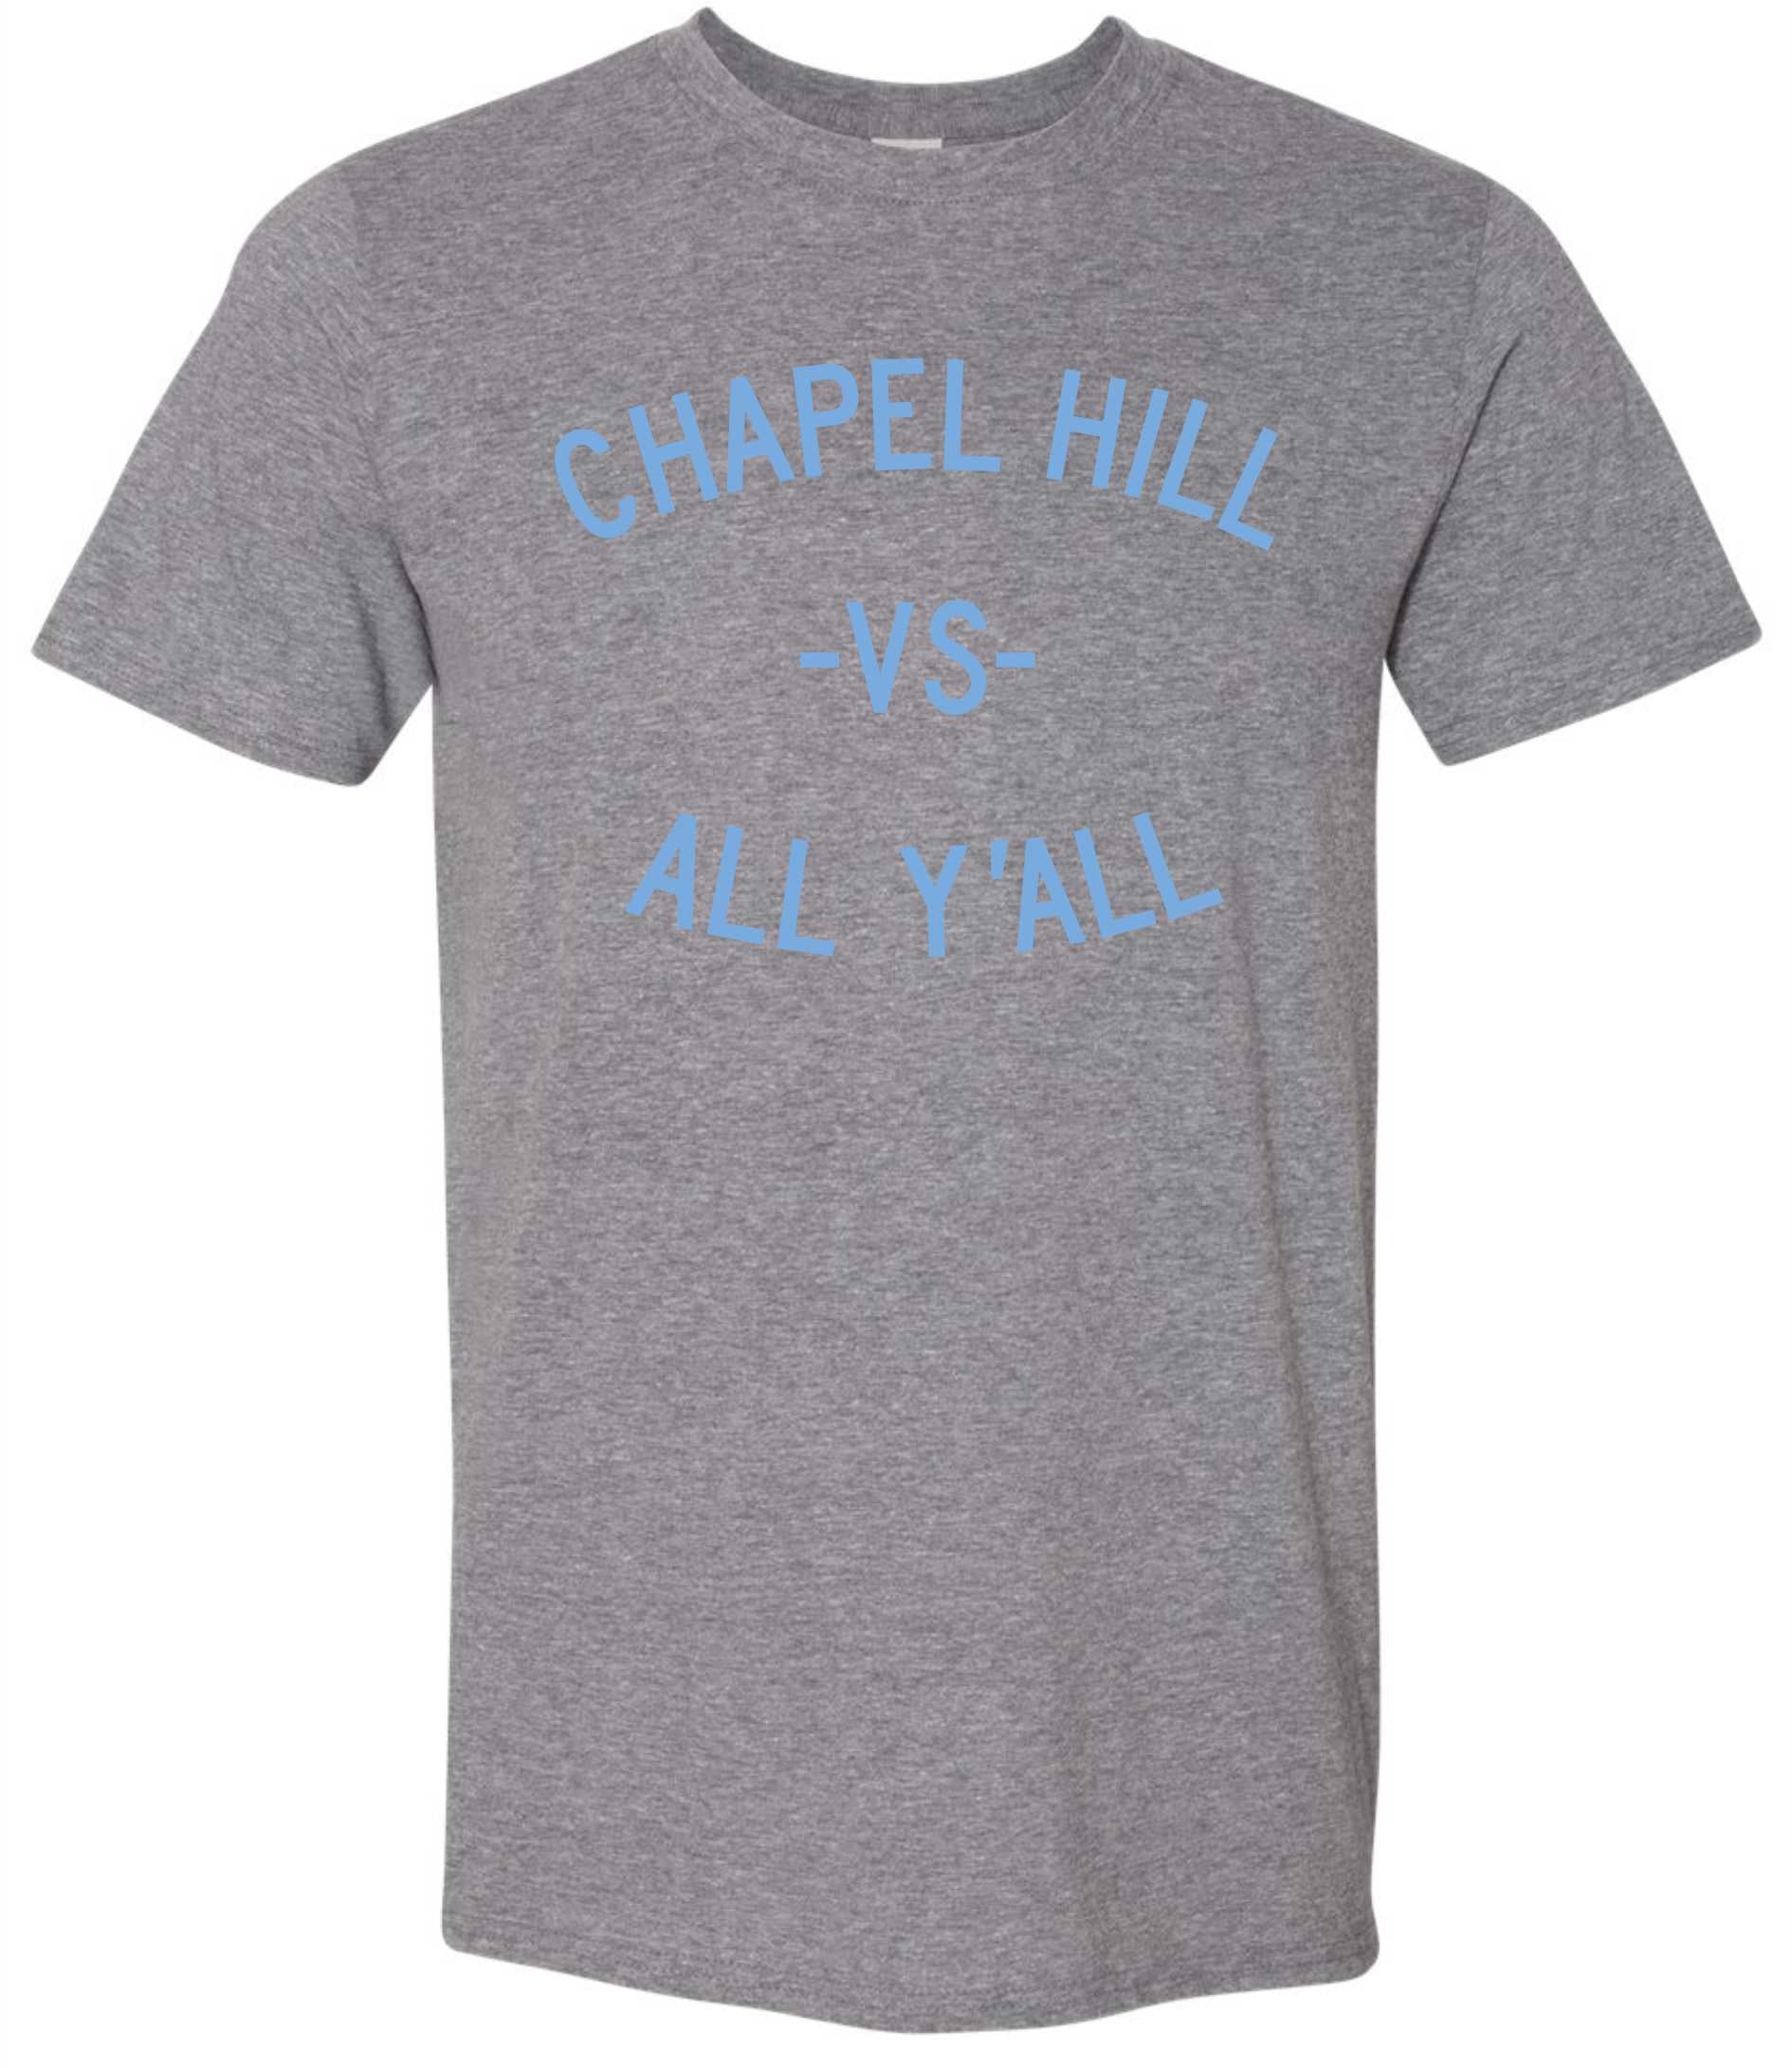 Chapel Hill Vs All Y'all T-shirt